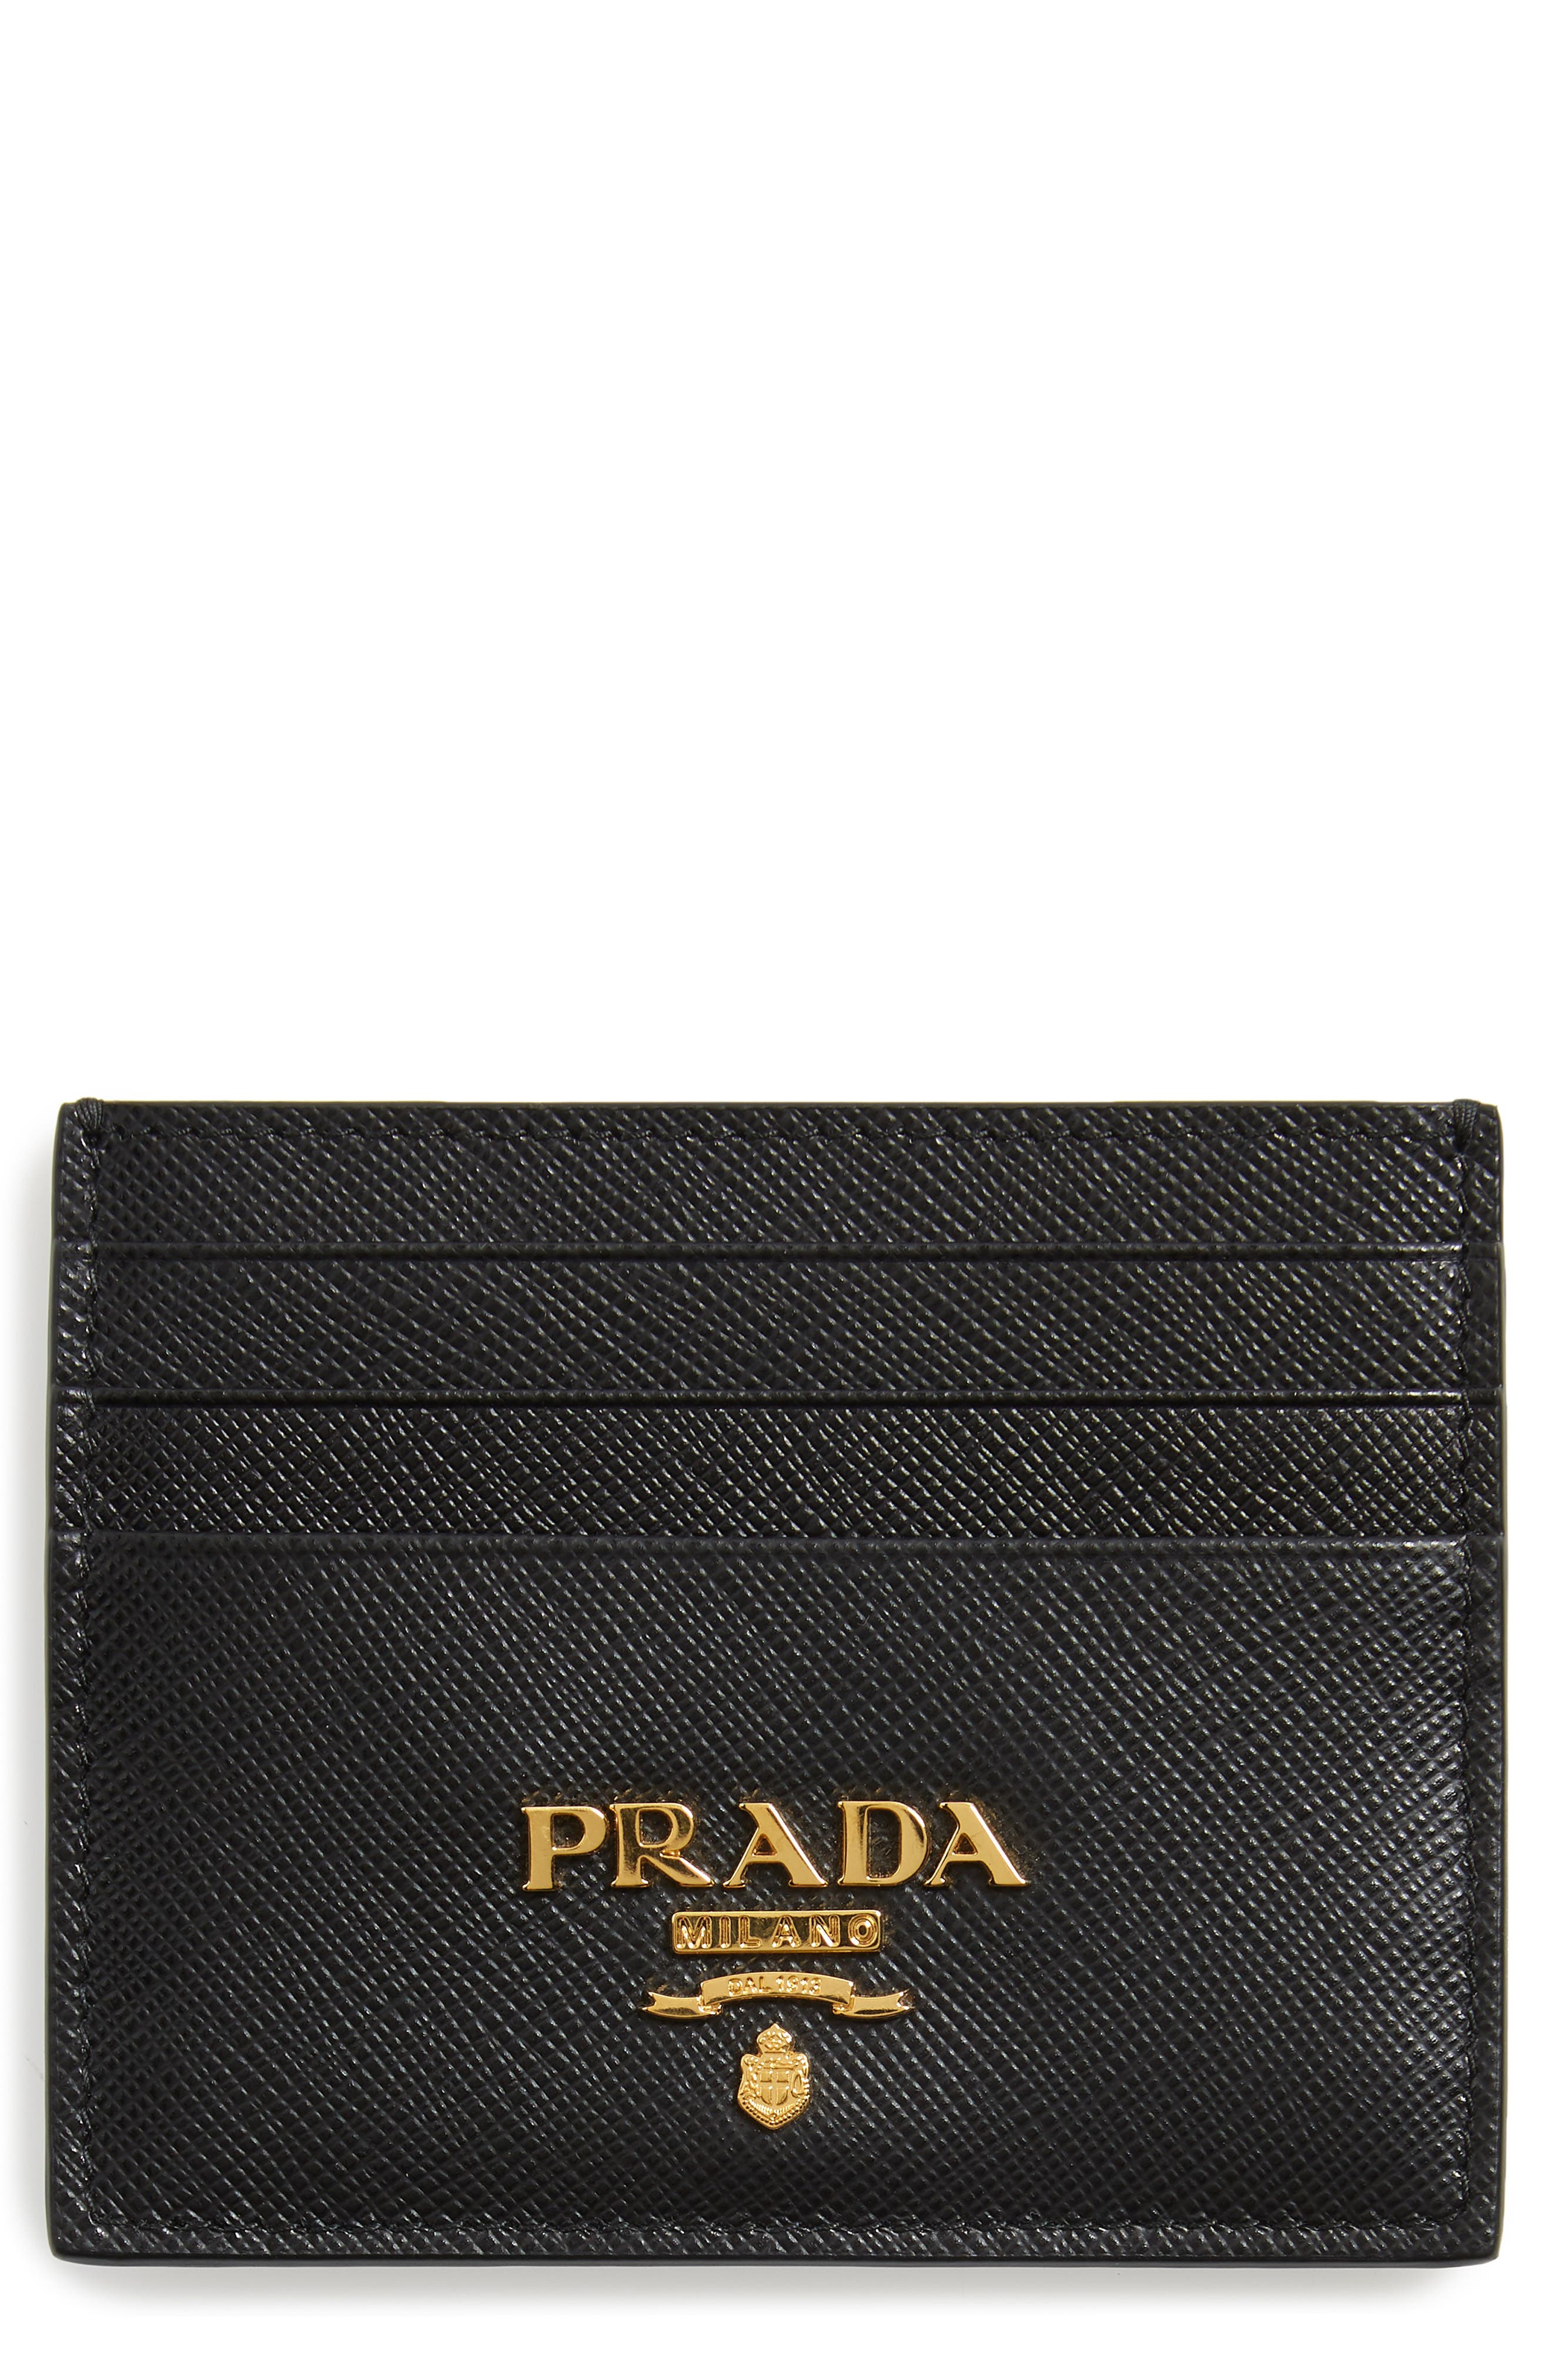 Prada Card Holder Price Sale, 56% OFF | campingcanyelles.com